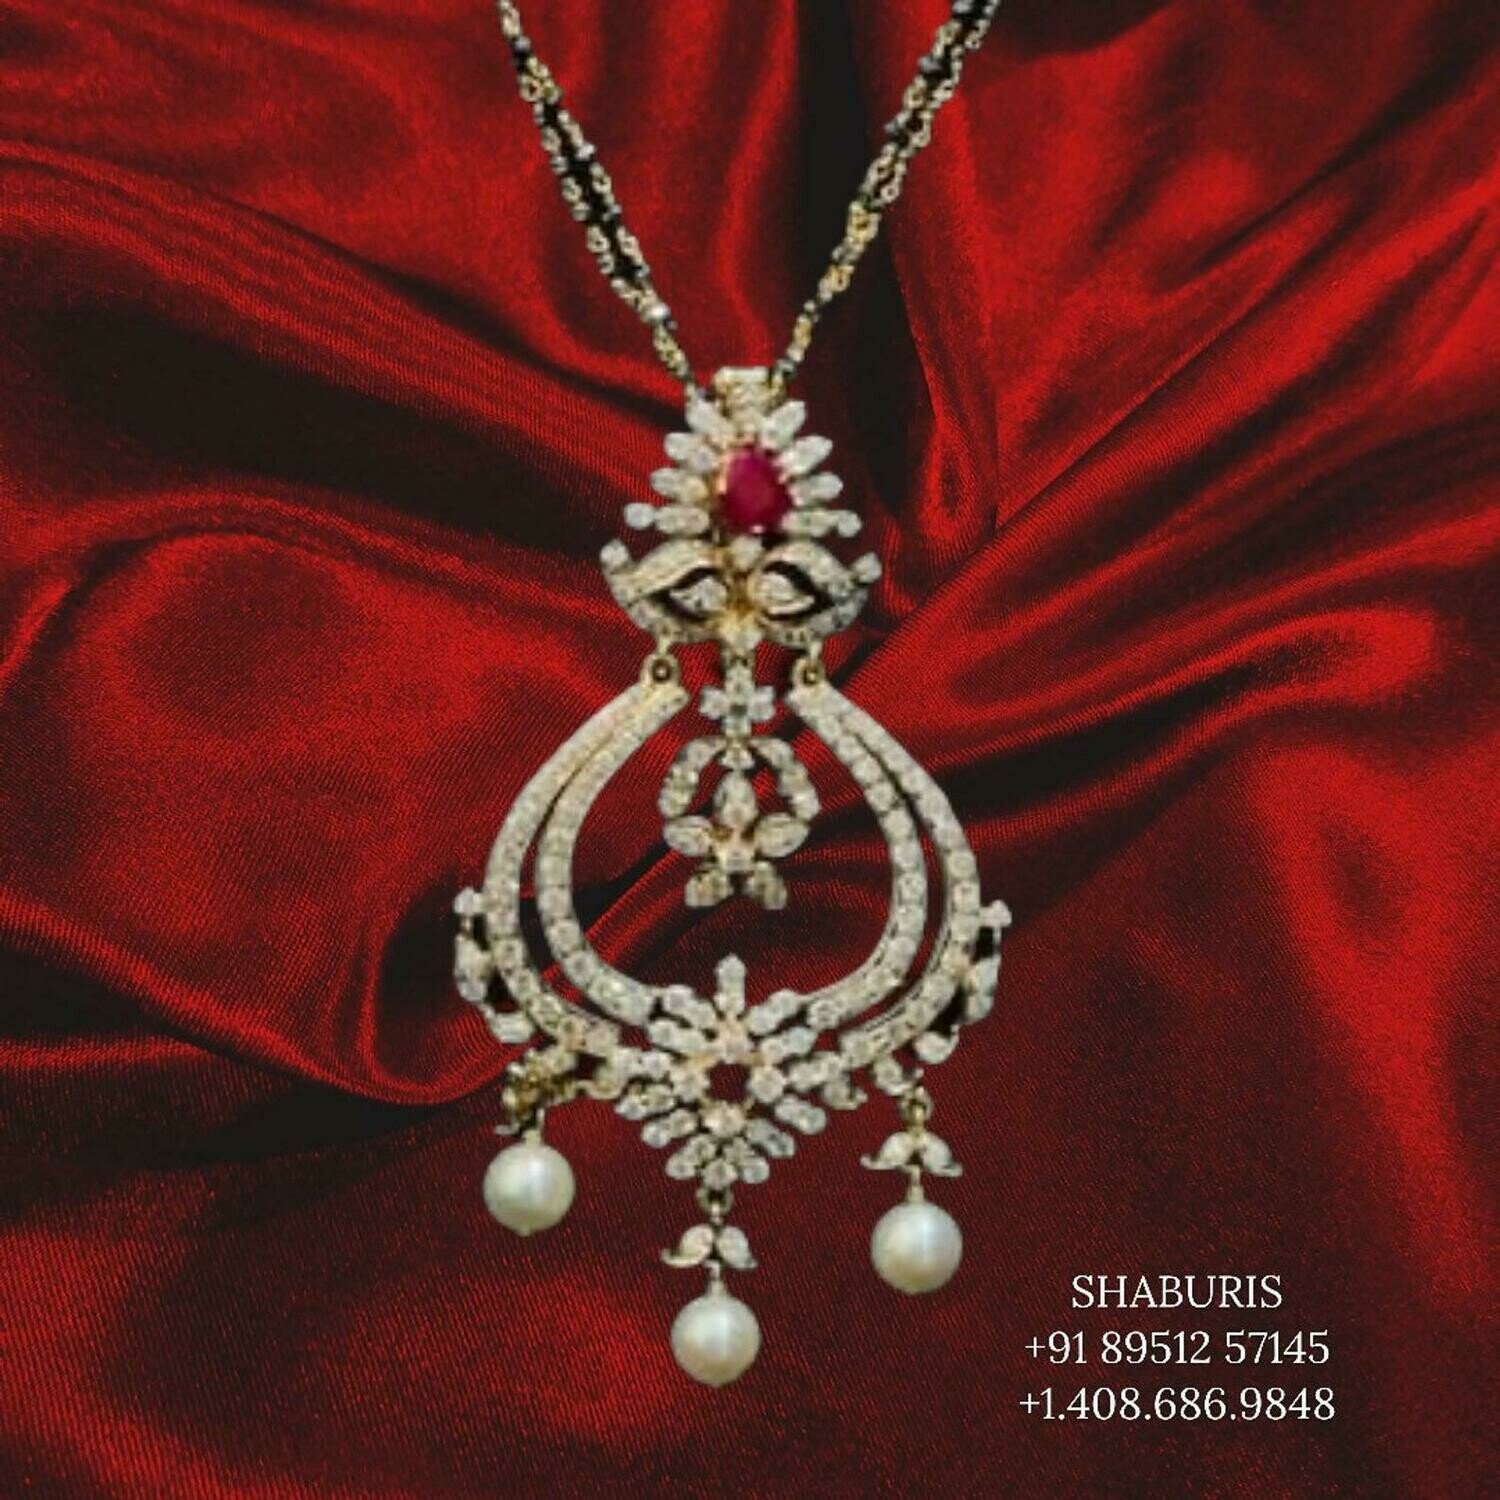 Diamond Mangal sutra,ruby pendant,black bead jewelry indian mangalsutra pure silver jewelry diamond jewelry -SHABURIS